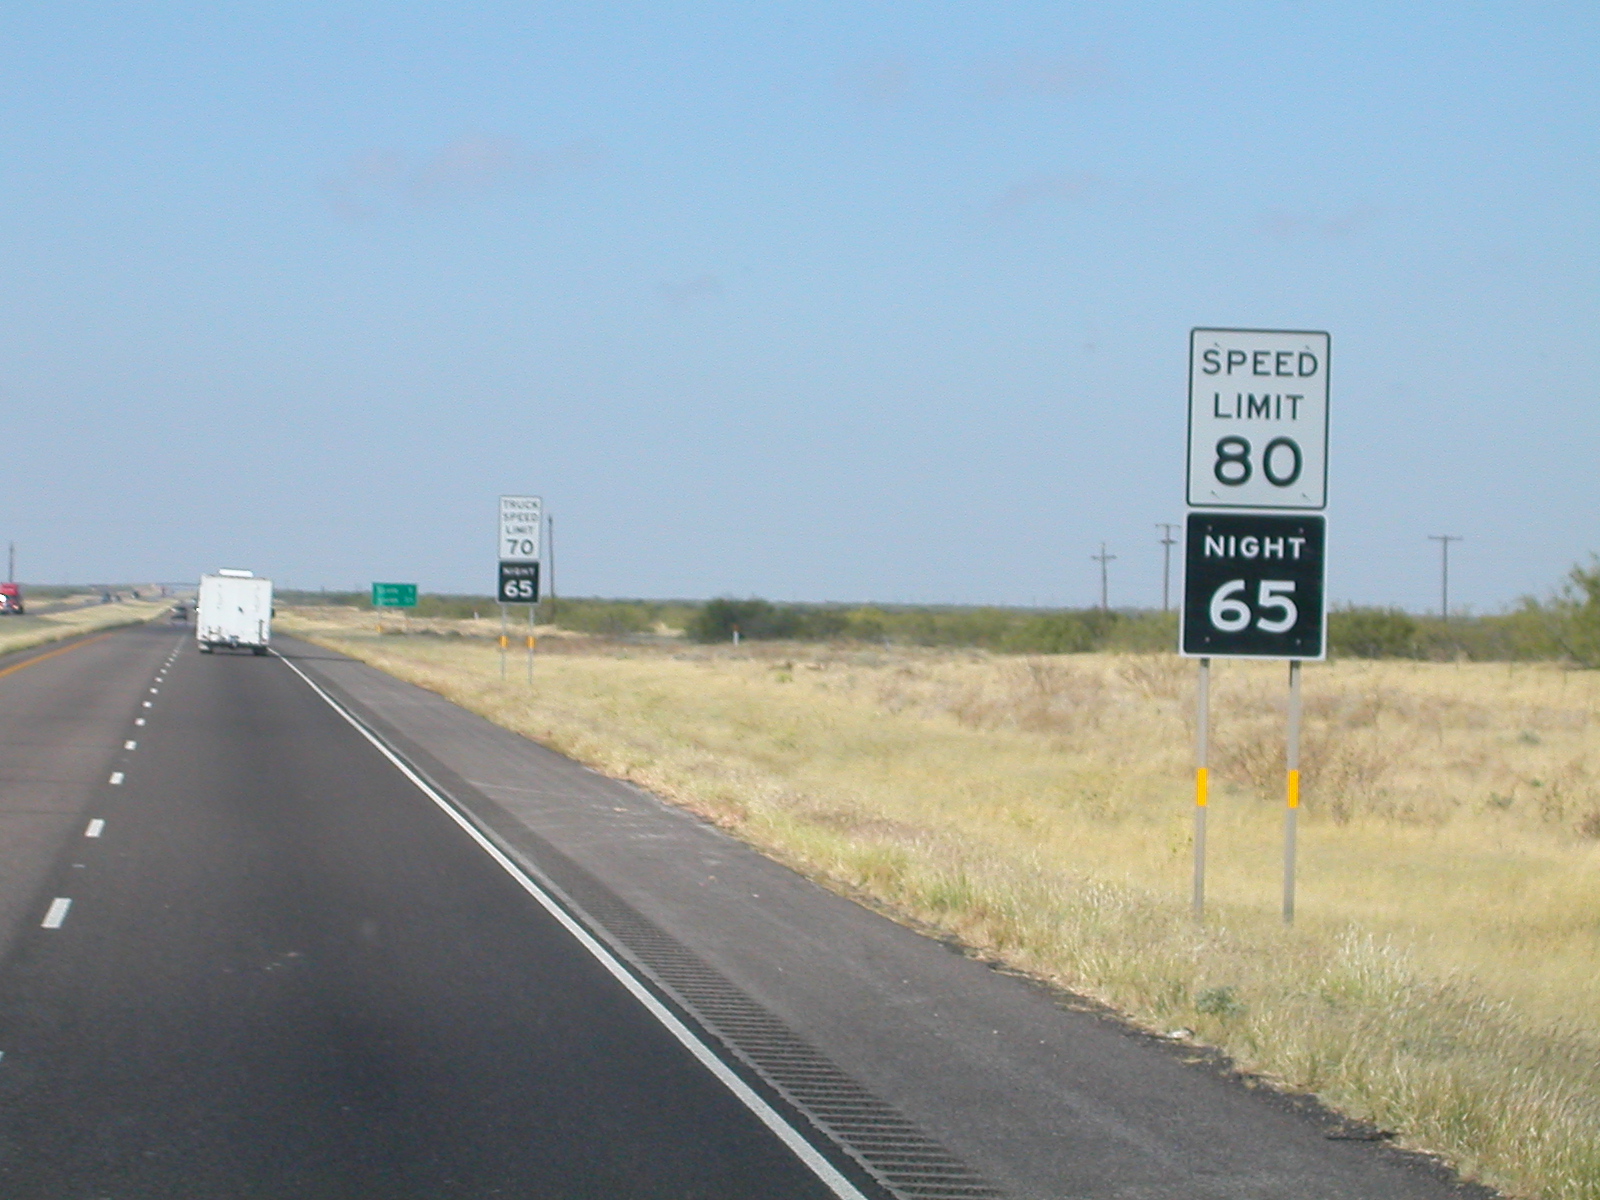 Texas - Speed limit 80 mph